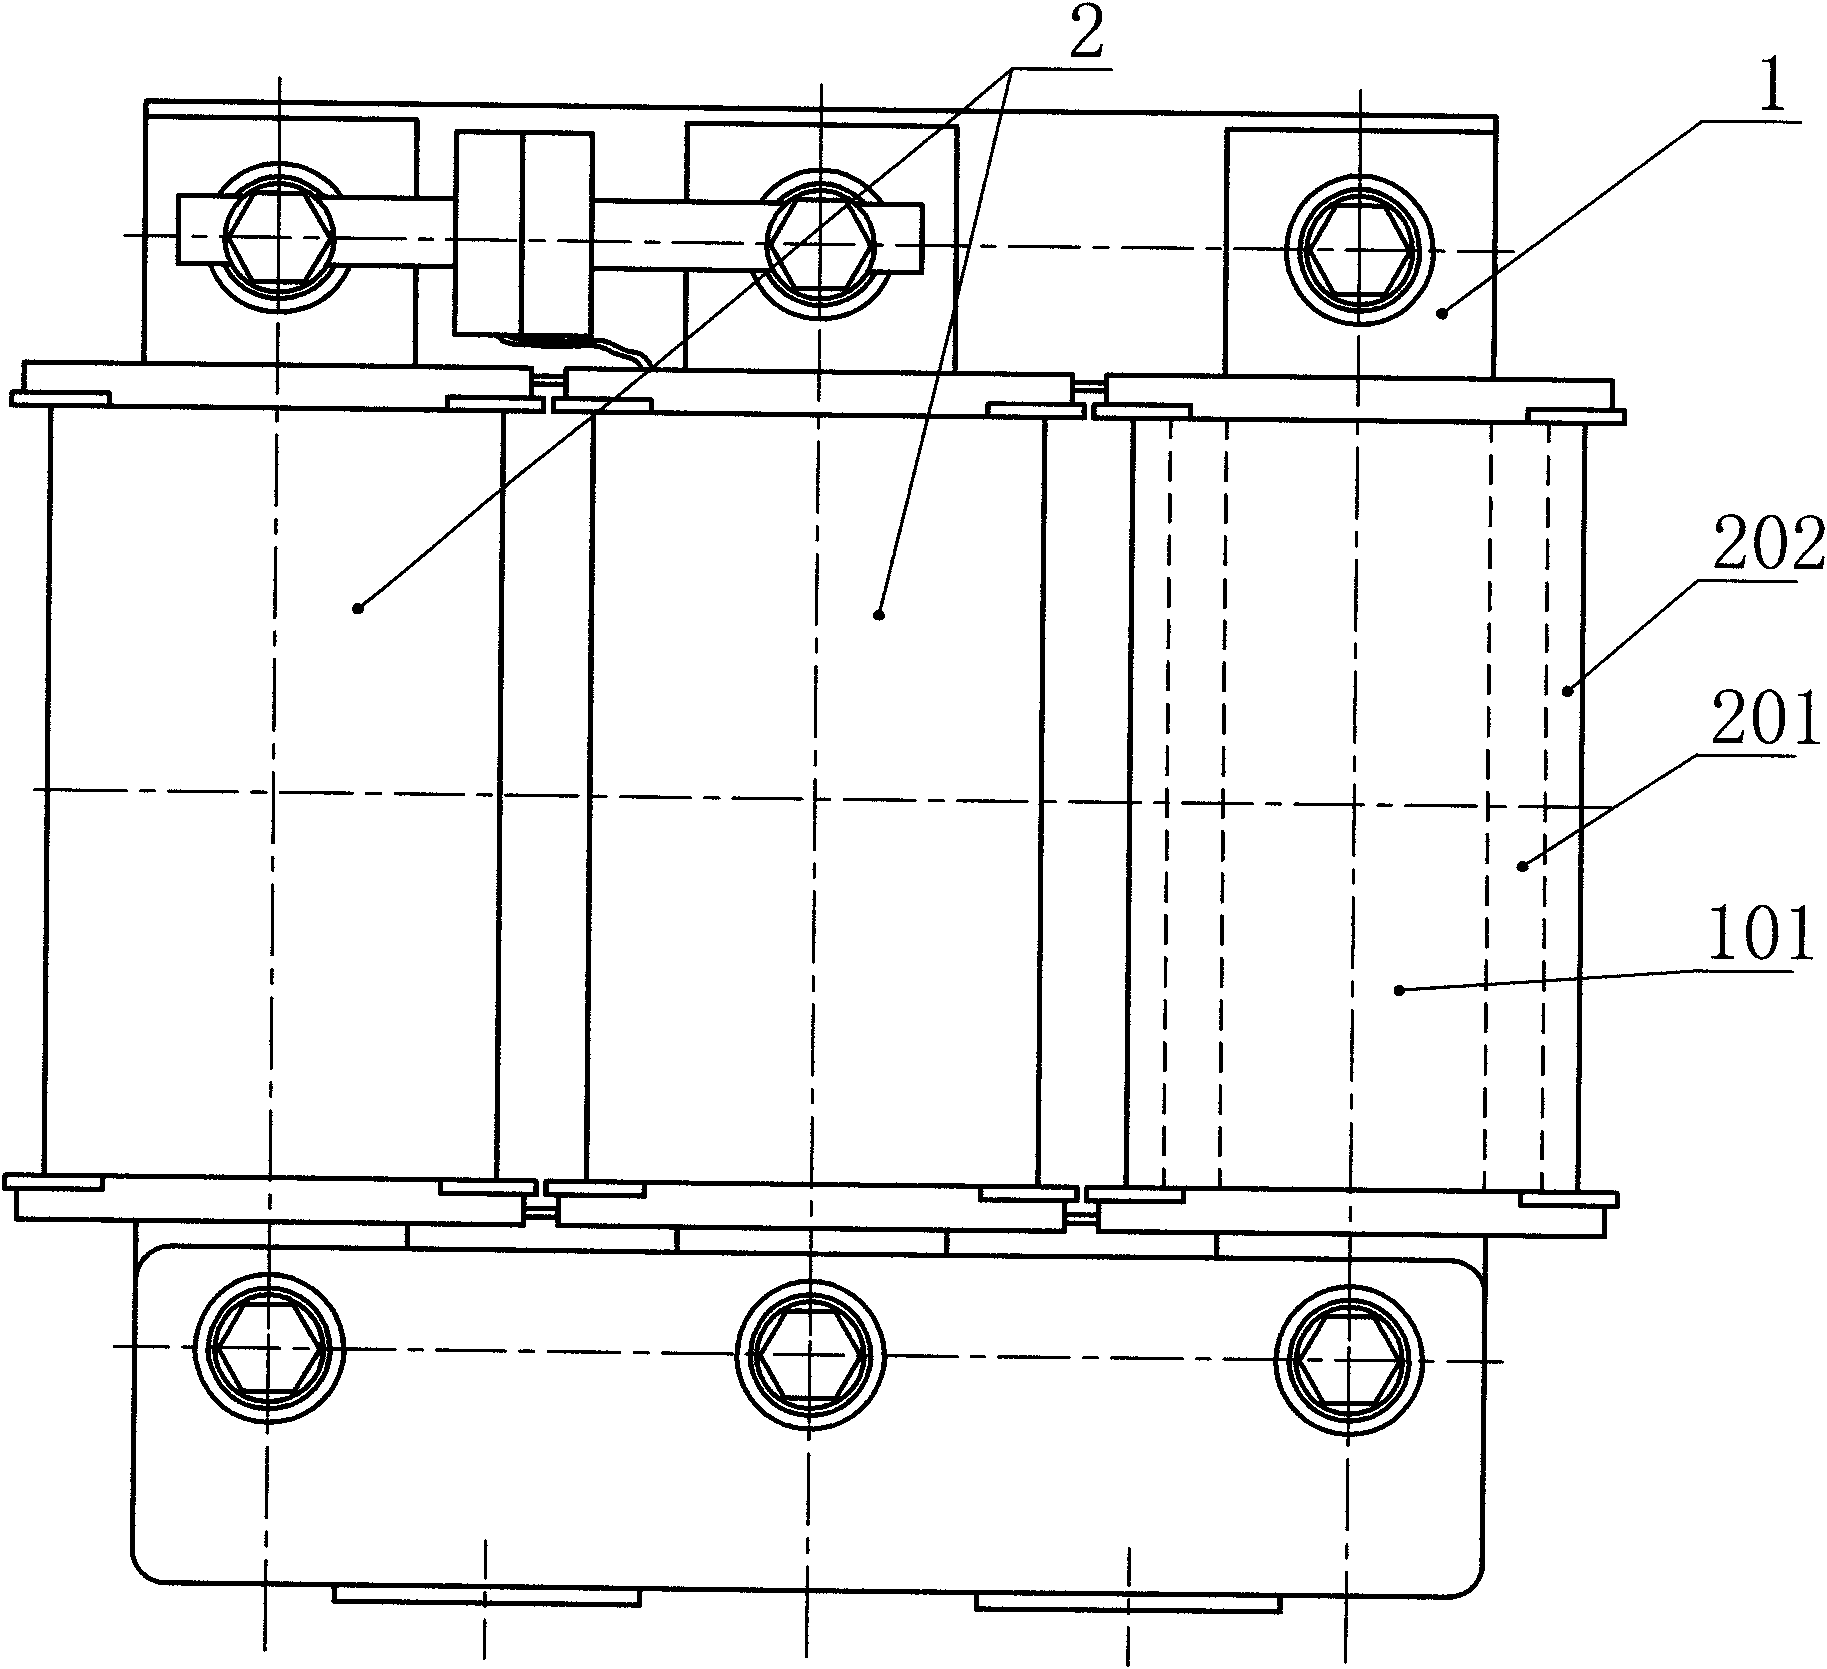 Winding type electric reactor